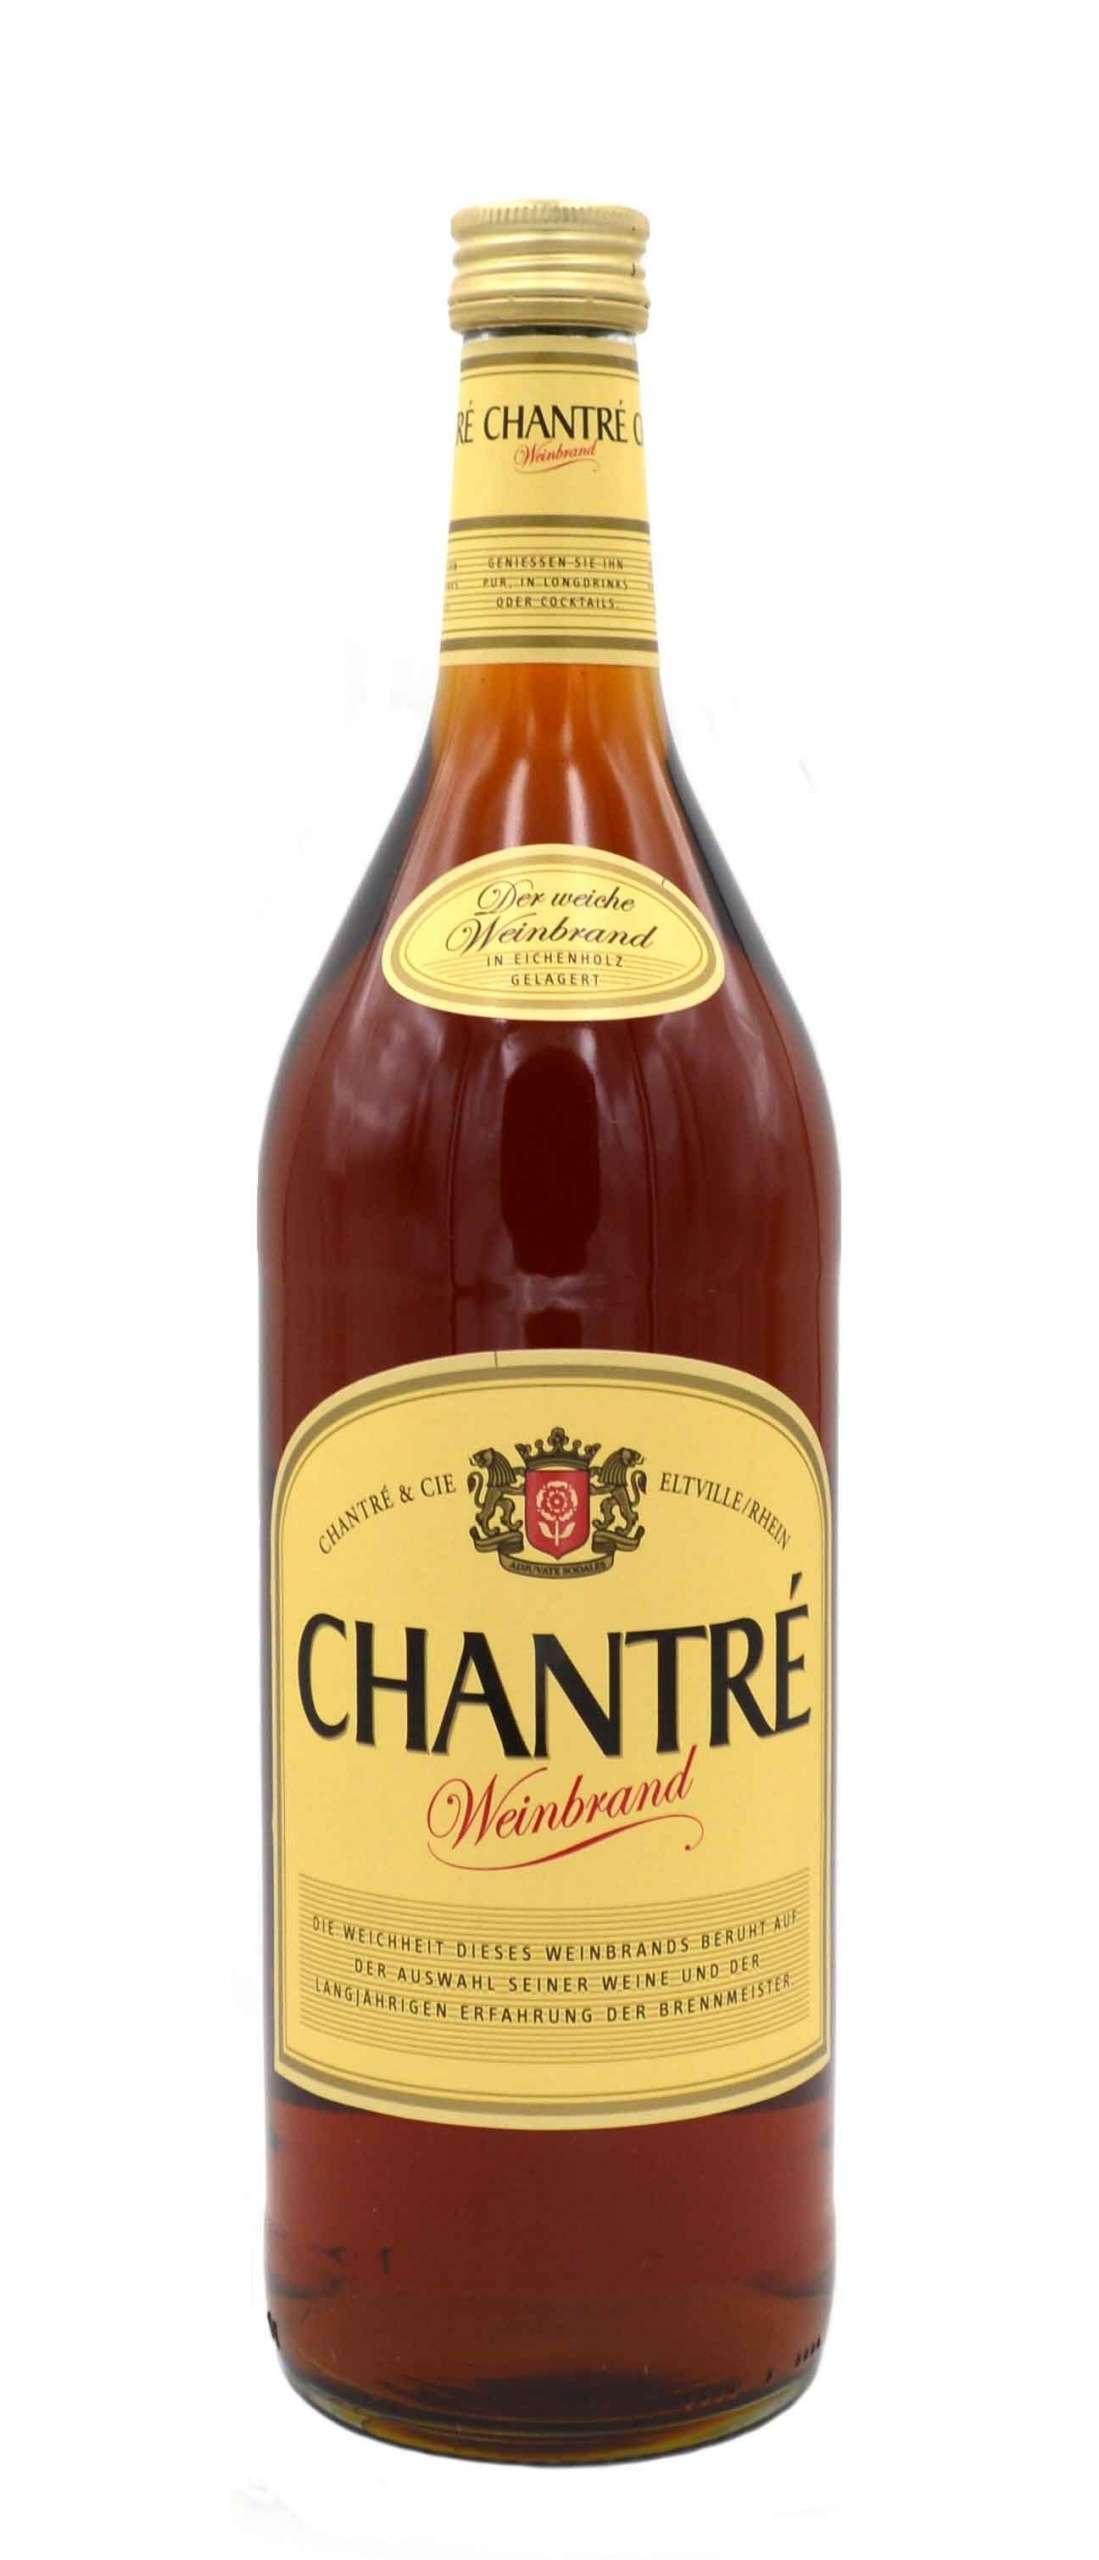 Chantre Weinbrand (brandy) 1.0l | worldwidespirits